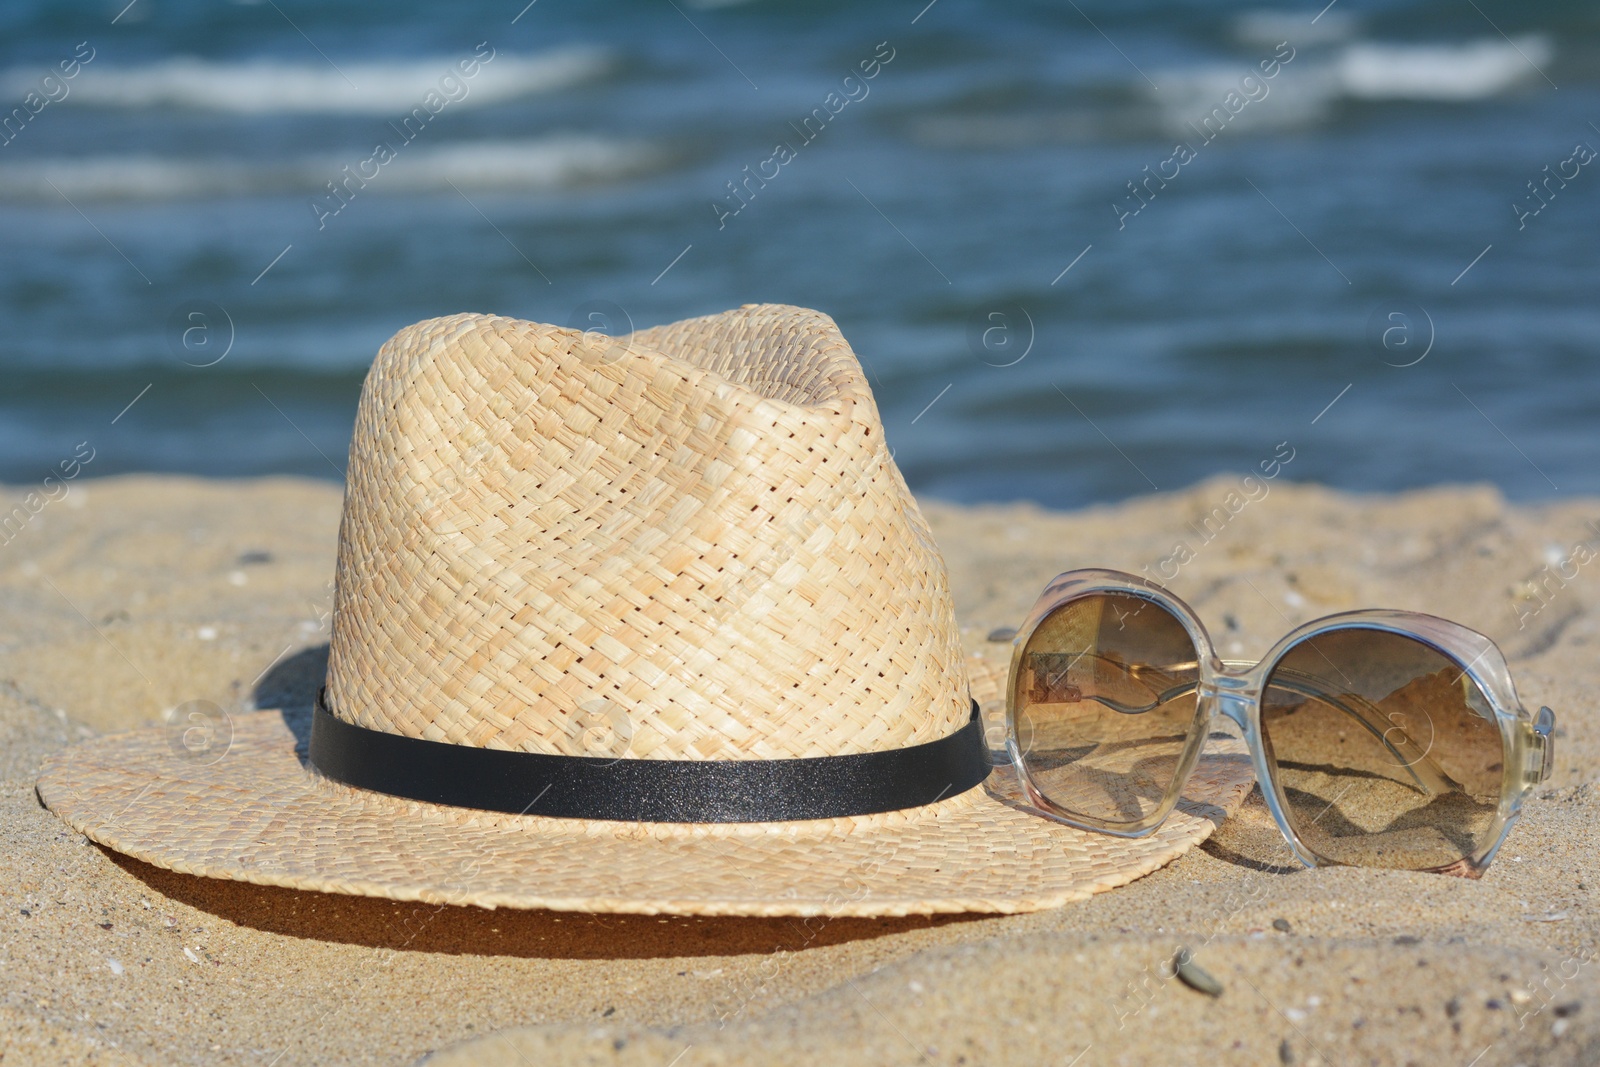 Photo of Stylish straw hat and sunglasses on sandy beach